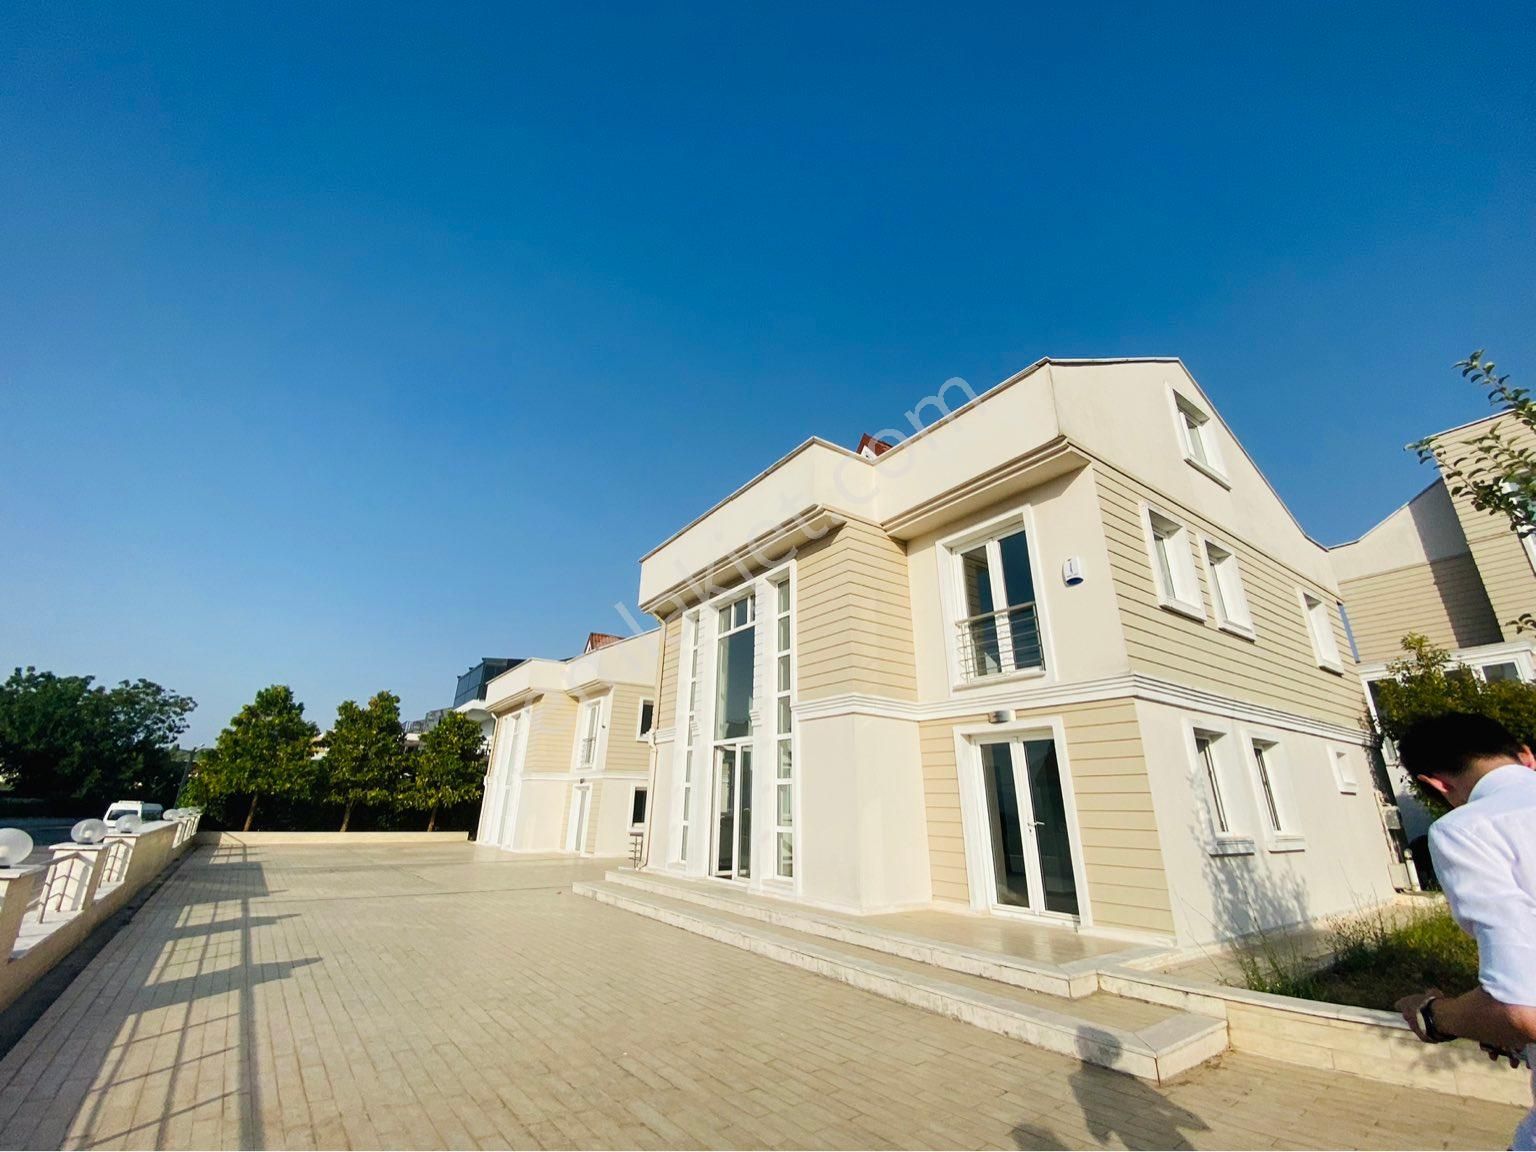 Osmangazi Hüdavendigar Satılık Villa BURSA HÜDAVENDİGAR’DA HARİKA KONUMDA SATILIK VİLLA